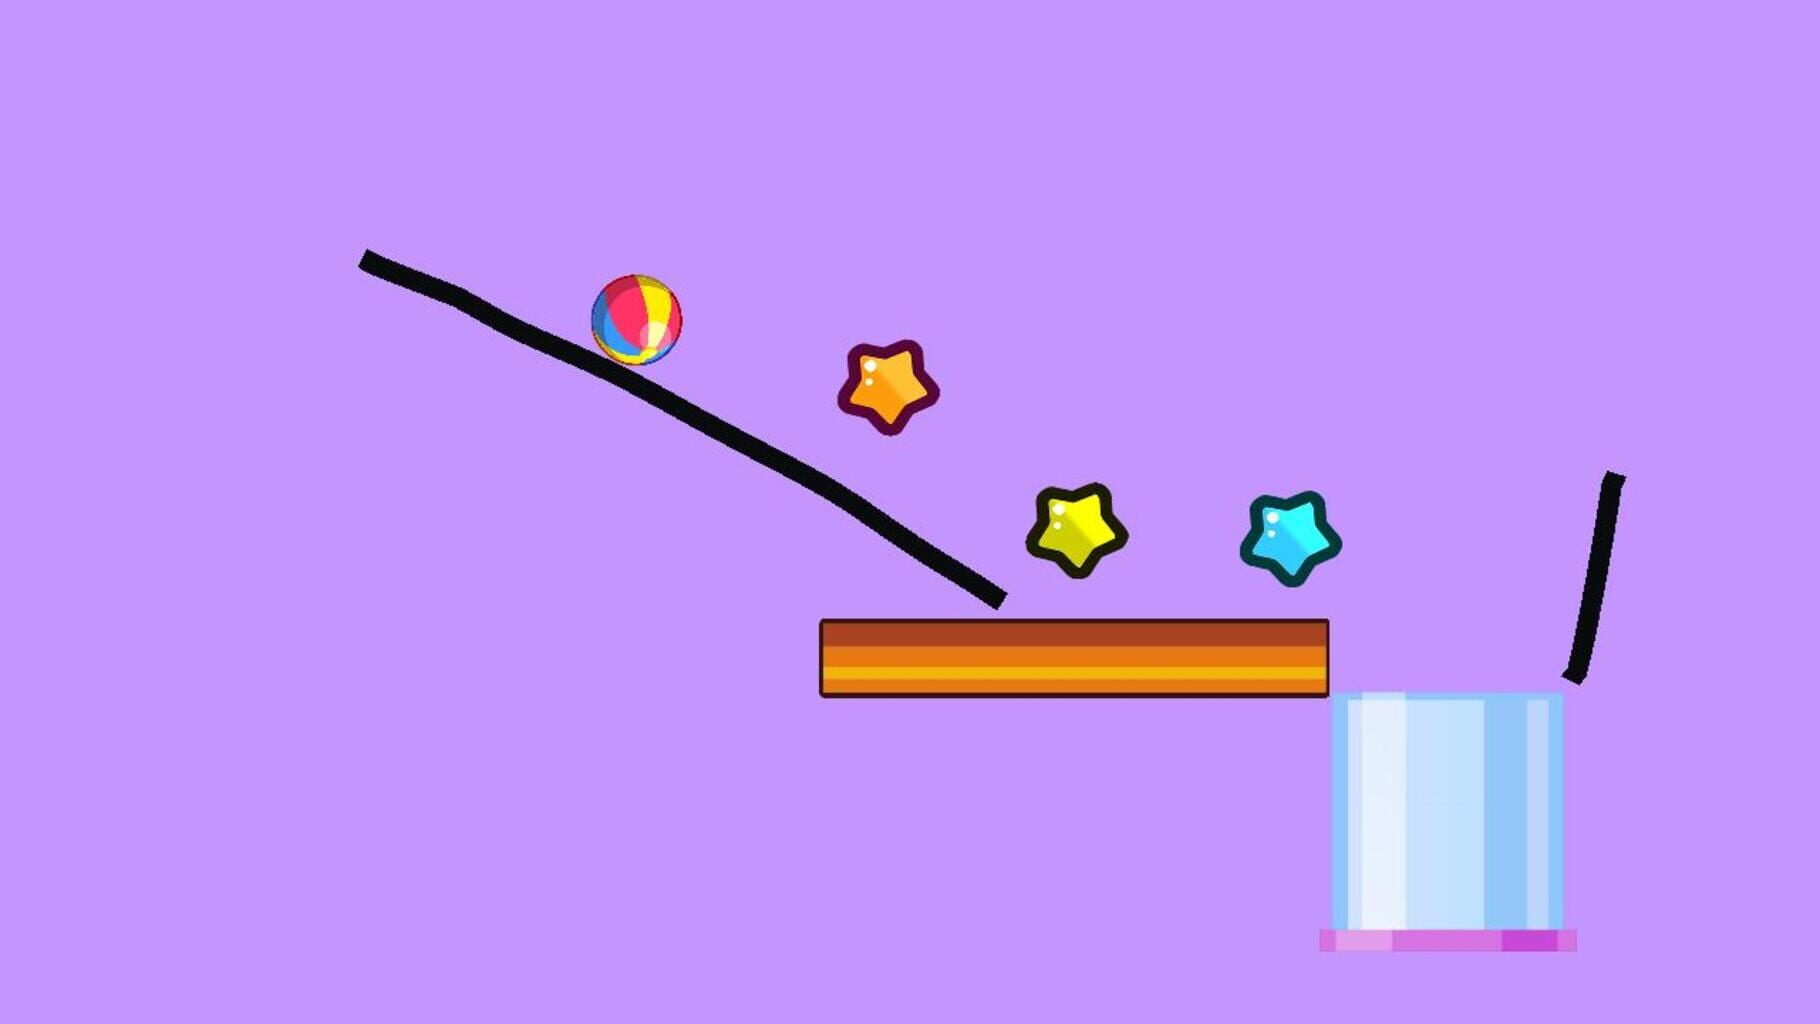 Ball Physics Draw Puzzles screenshot